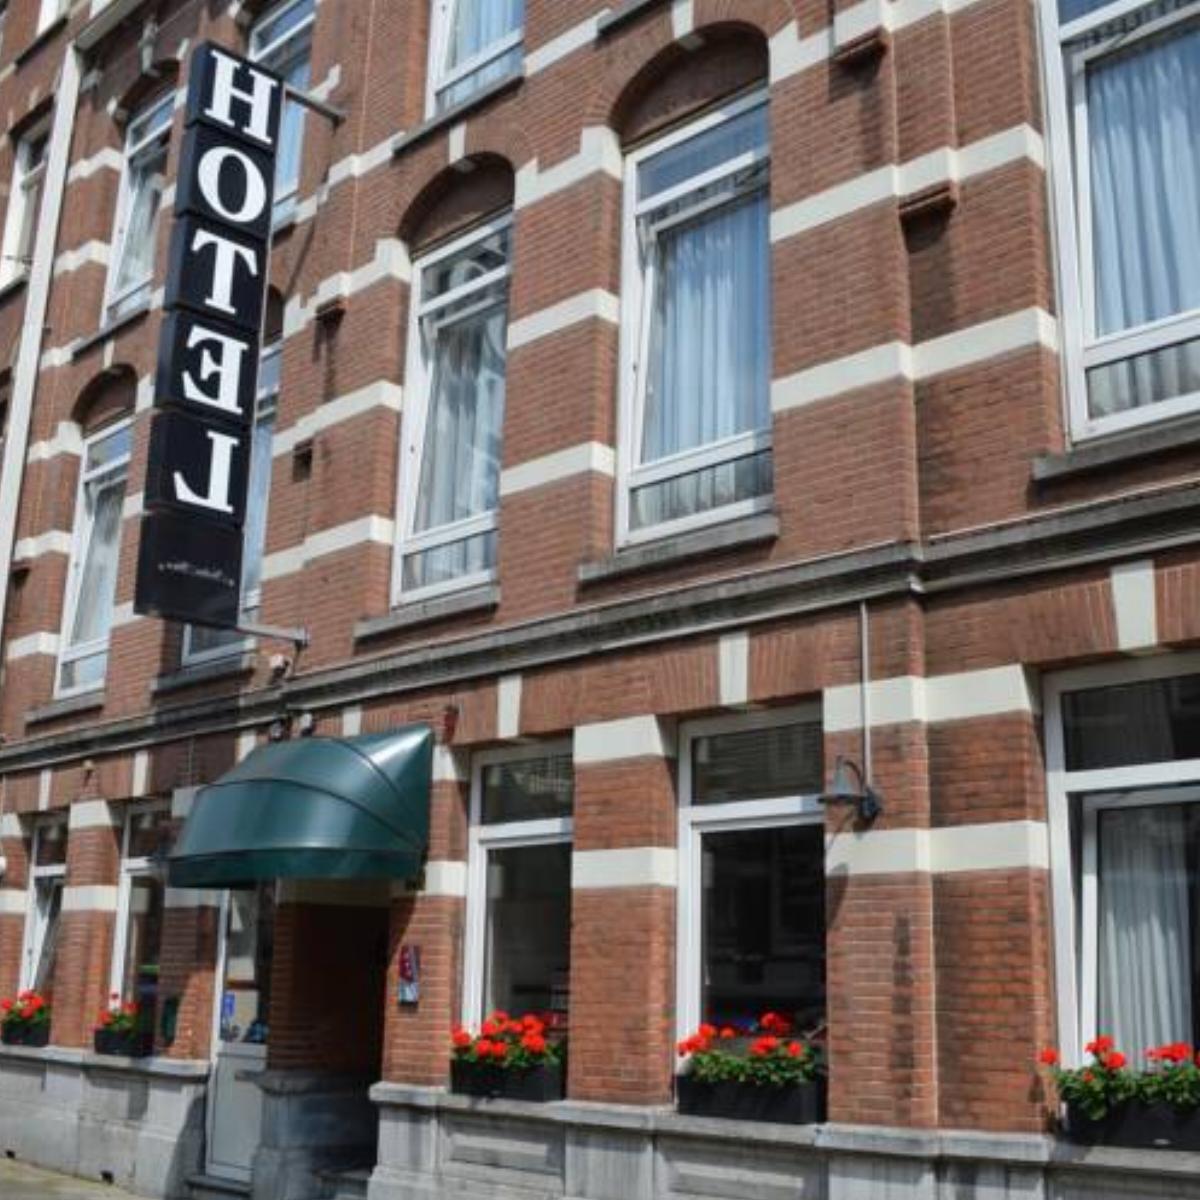 Hotel Nicolaas Witsen Hotel Amsterdam Netherlands